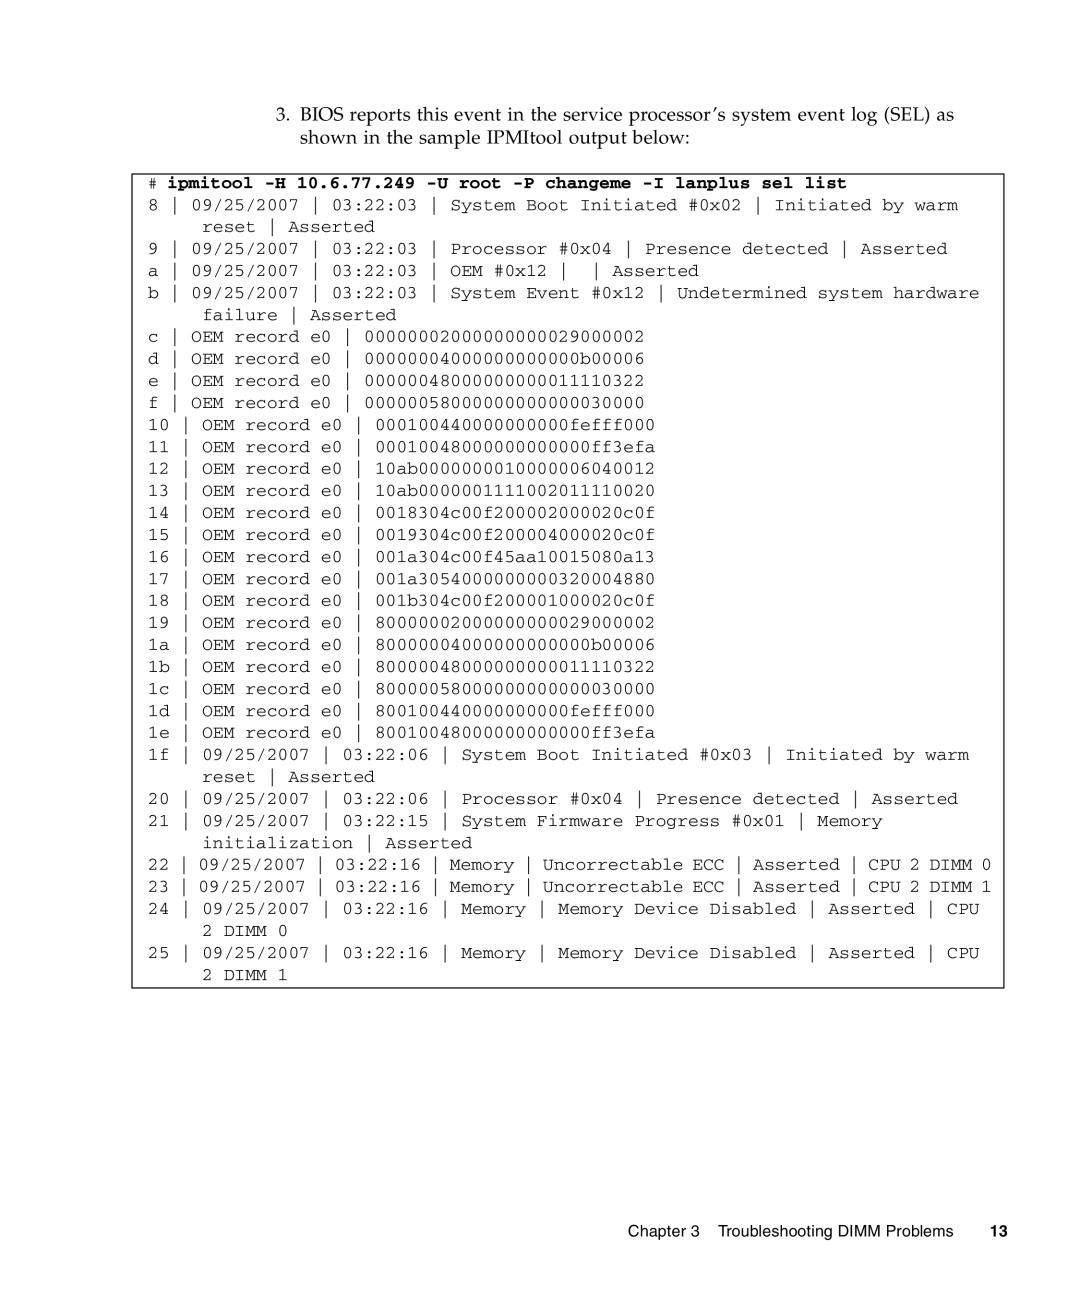 Sun Microsystems X4140, X4240, X4440 manual # ipmitool -H 10.6.77.249 -U root -P changeme -I lanplus sel list 